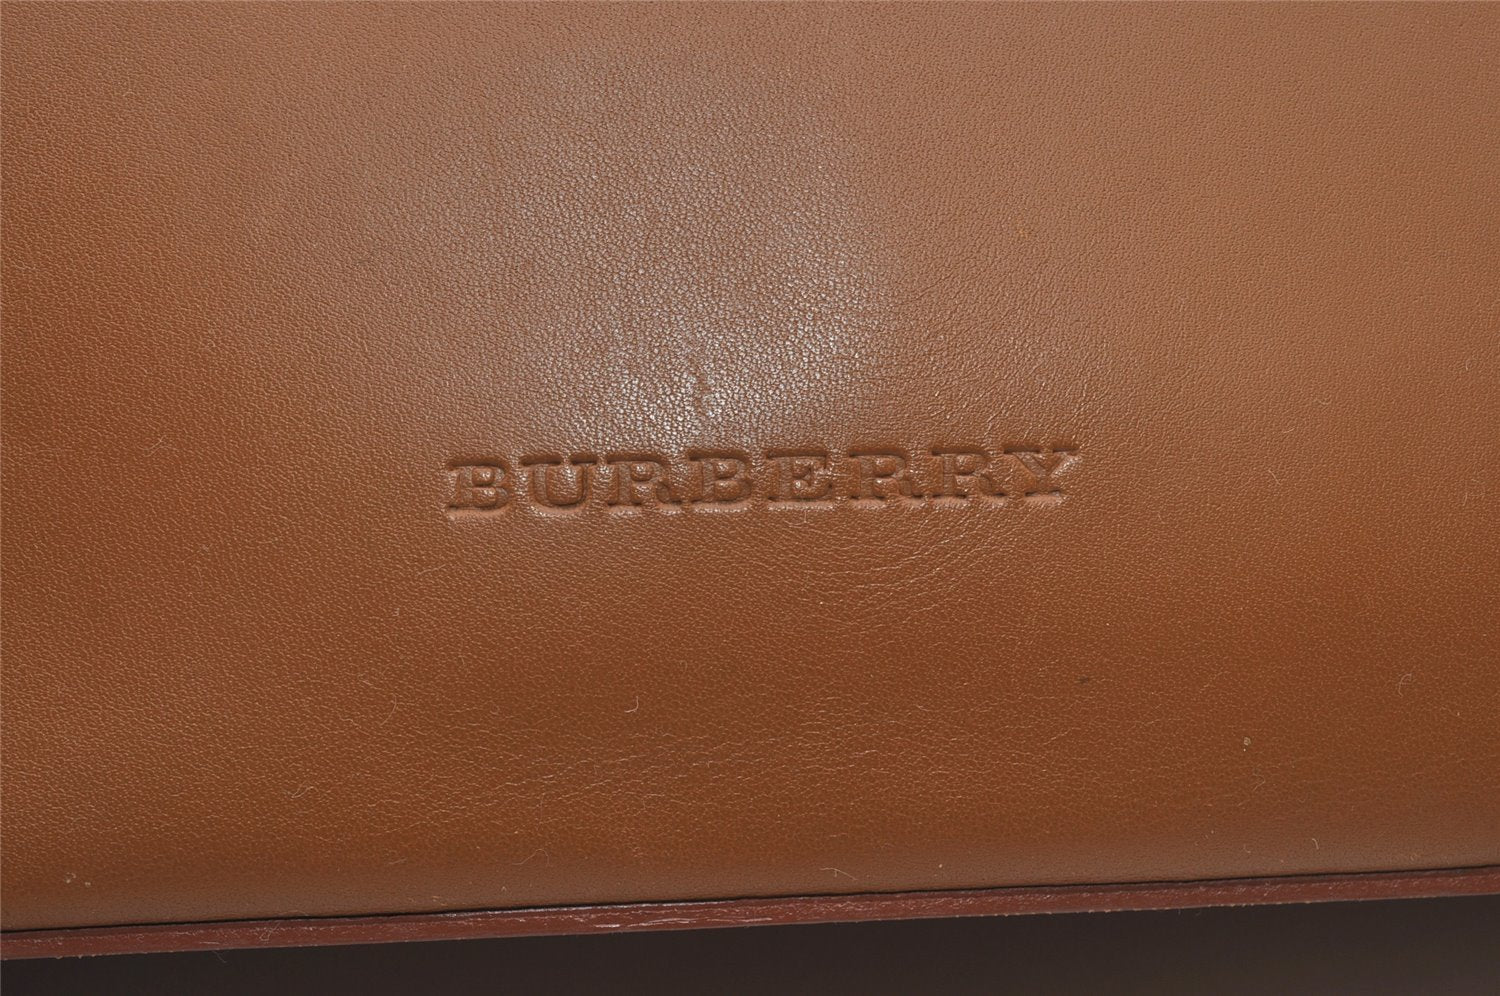 Authentic BURBERRY Vintage Leather Shoulder Tote Bag Brown 5795I